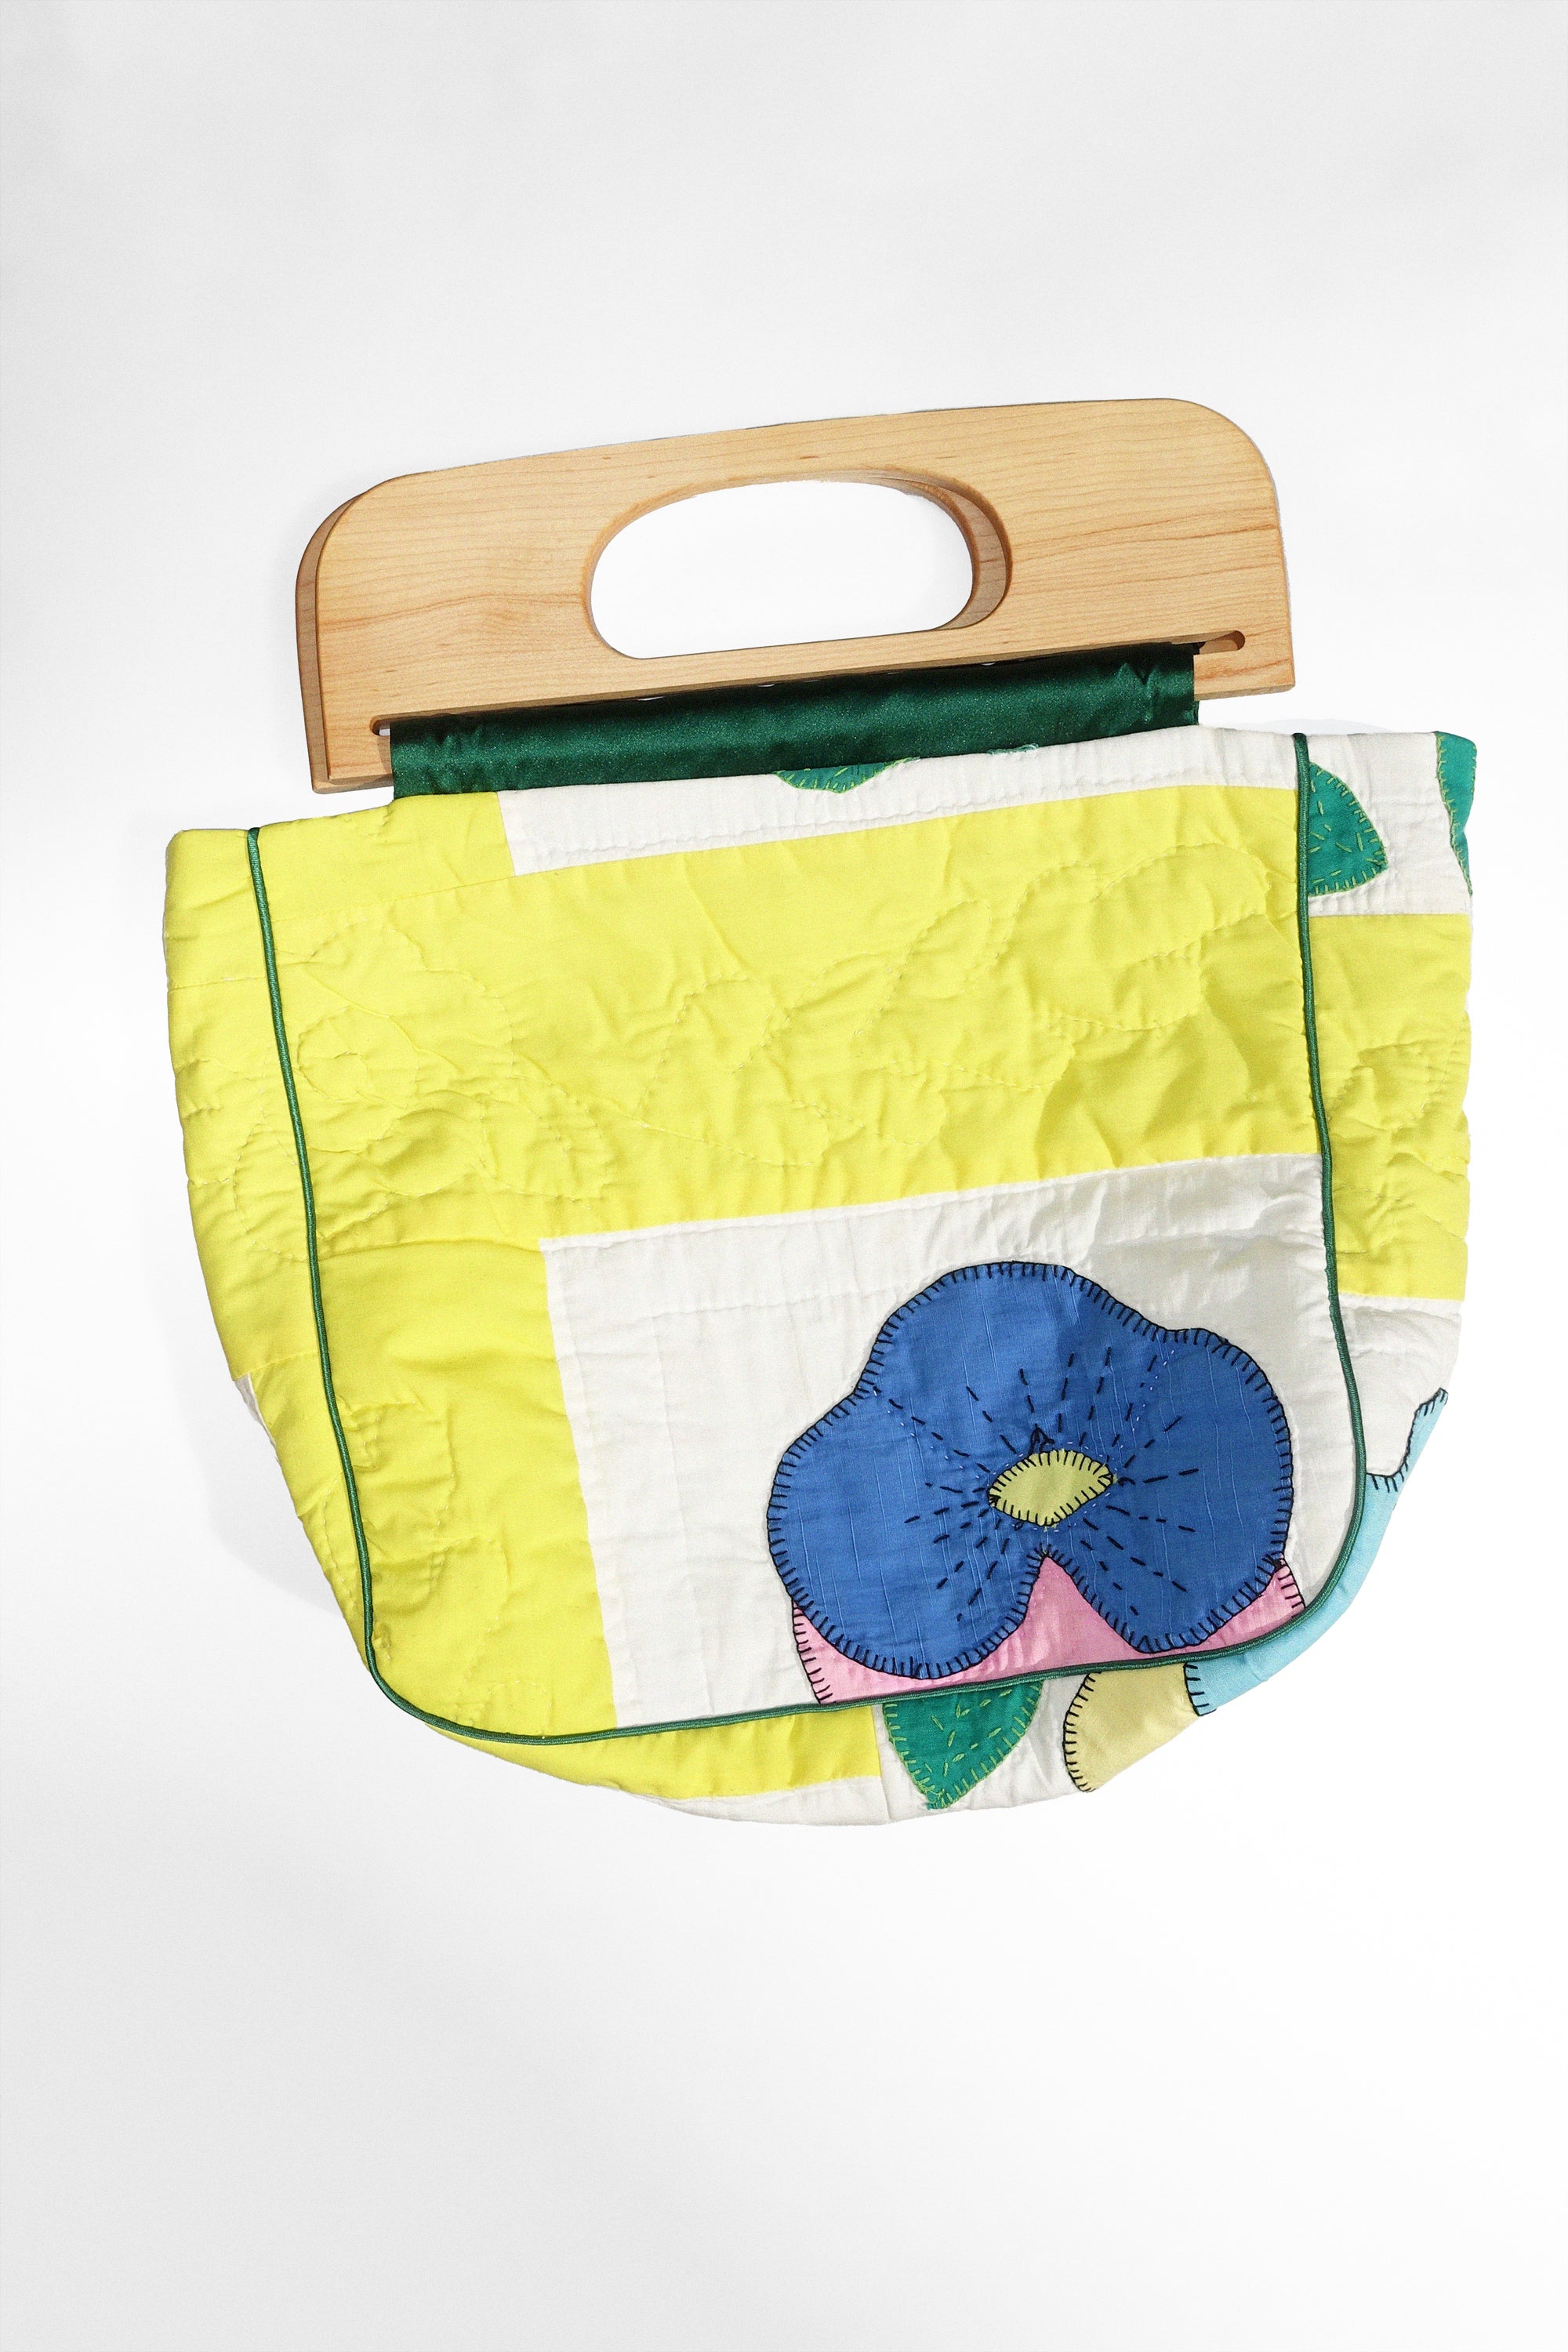 Quilt Boxy Handbag: OOAK